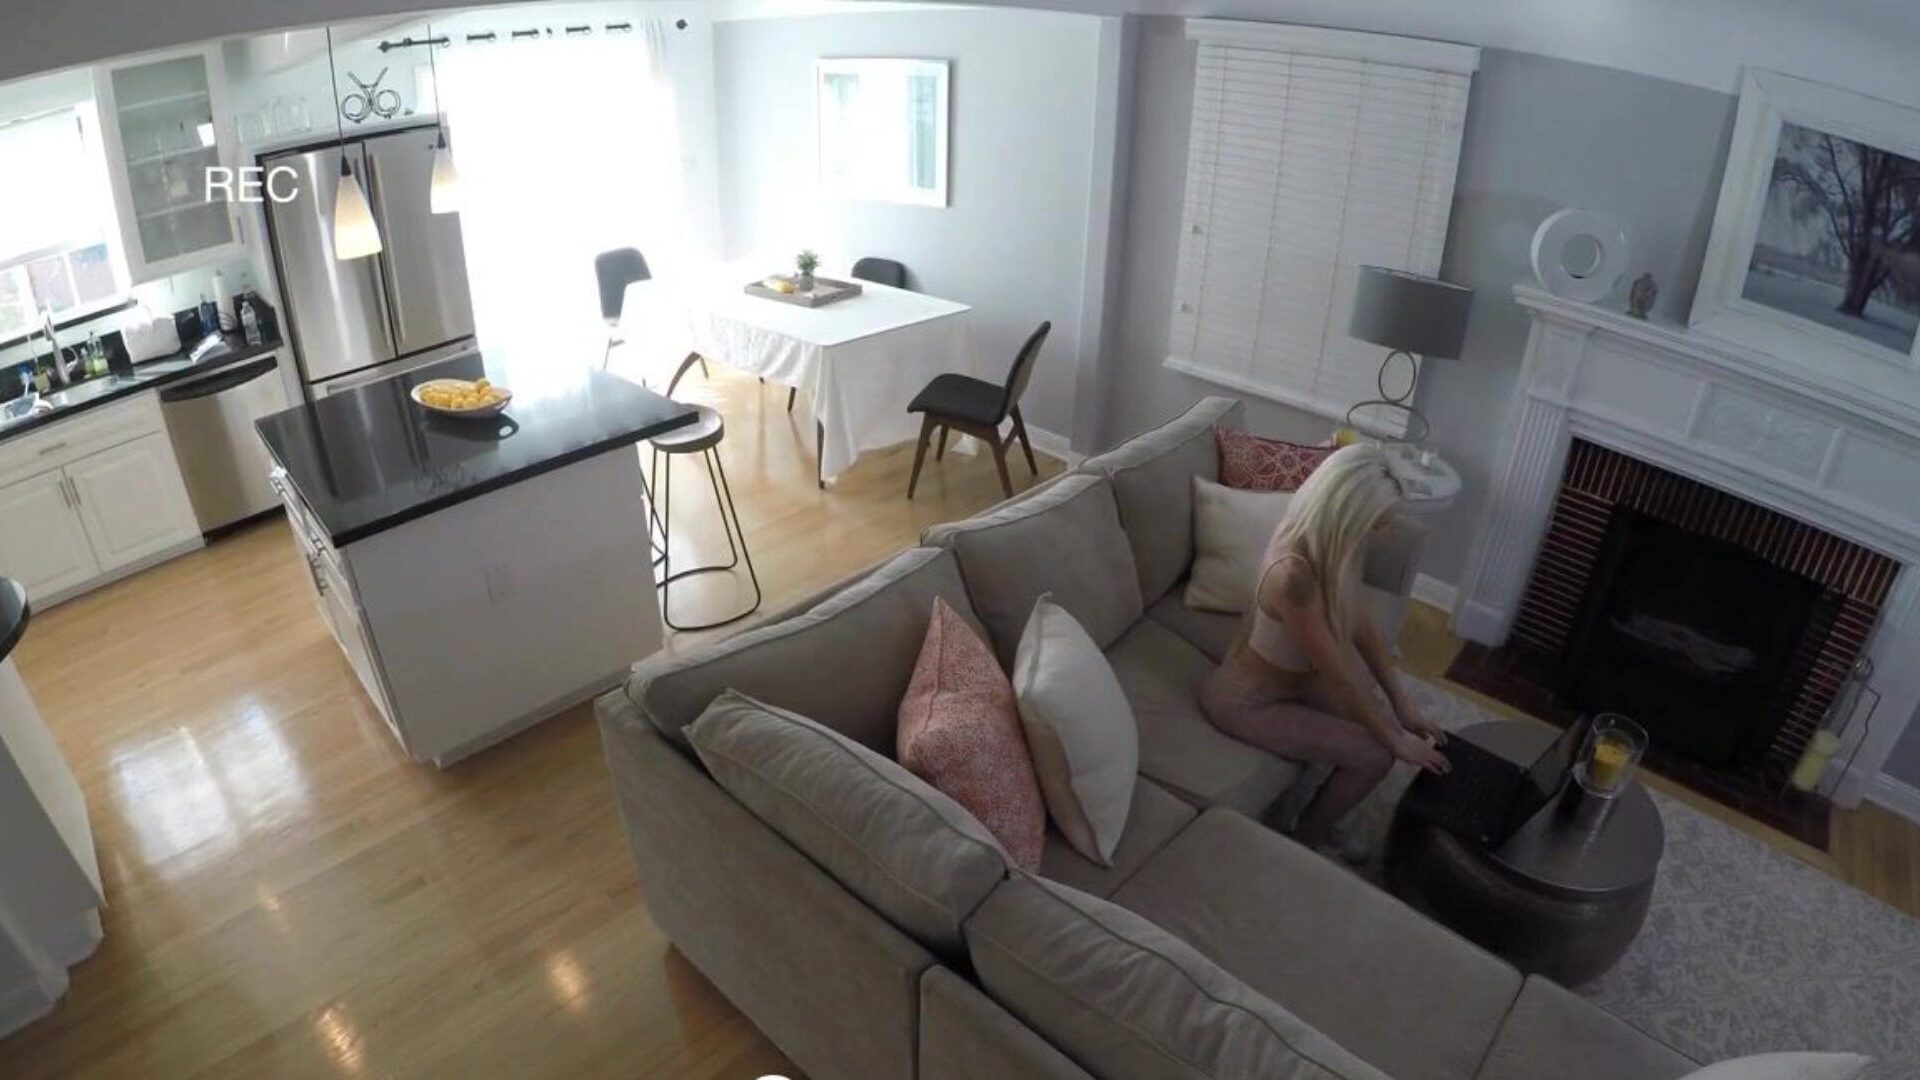 nannyyspy fanboy tată în sfârșit dracu webcam camera bona